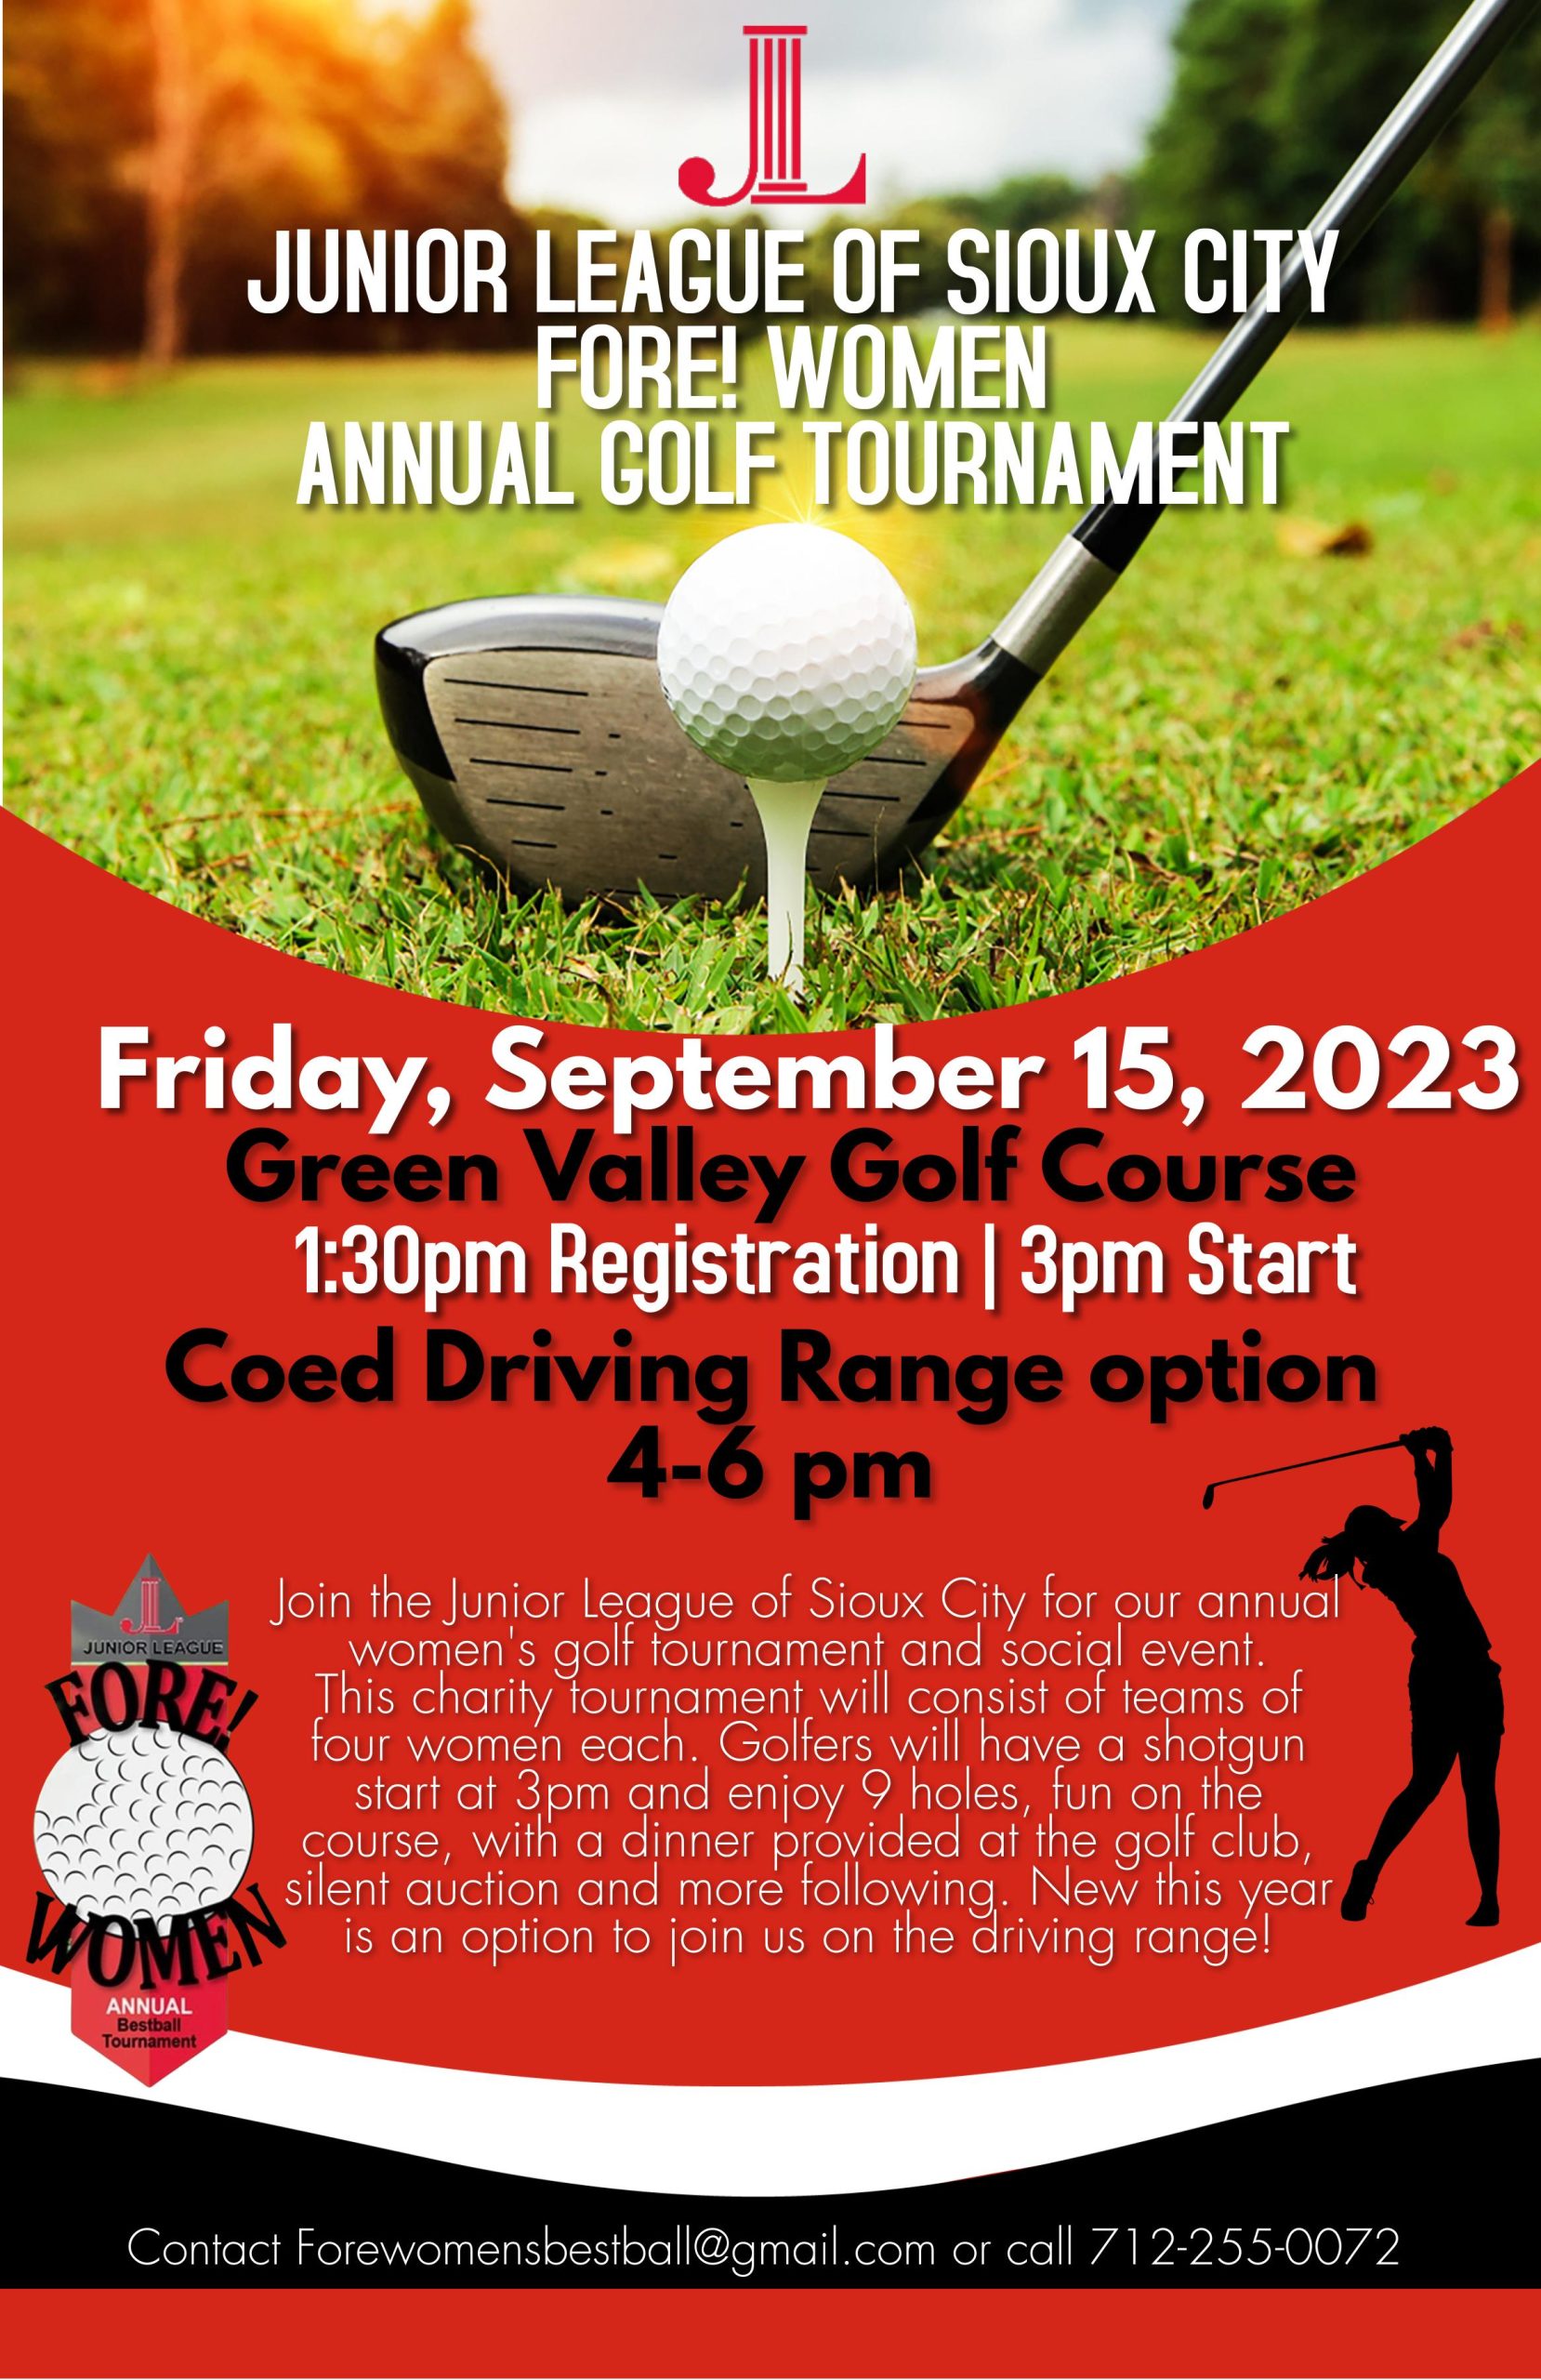 Junior League of Sioux City Fore! Women Golf Tournament